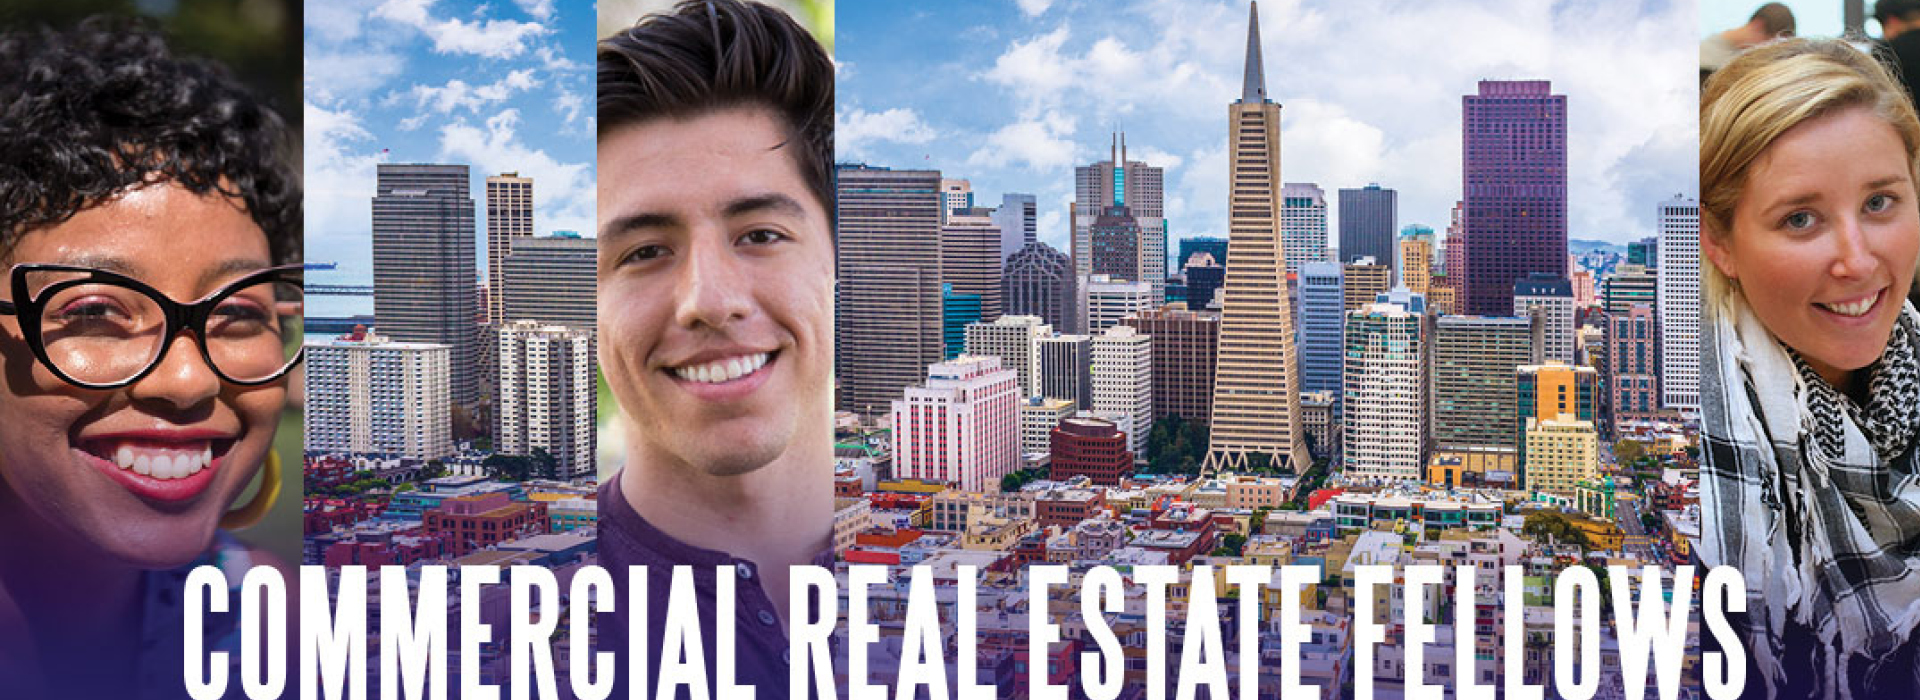  Commercial Real Estate Fellows Program